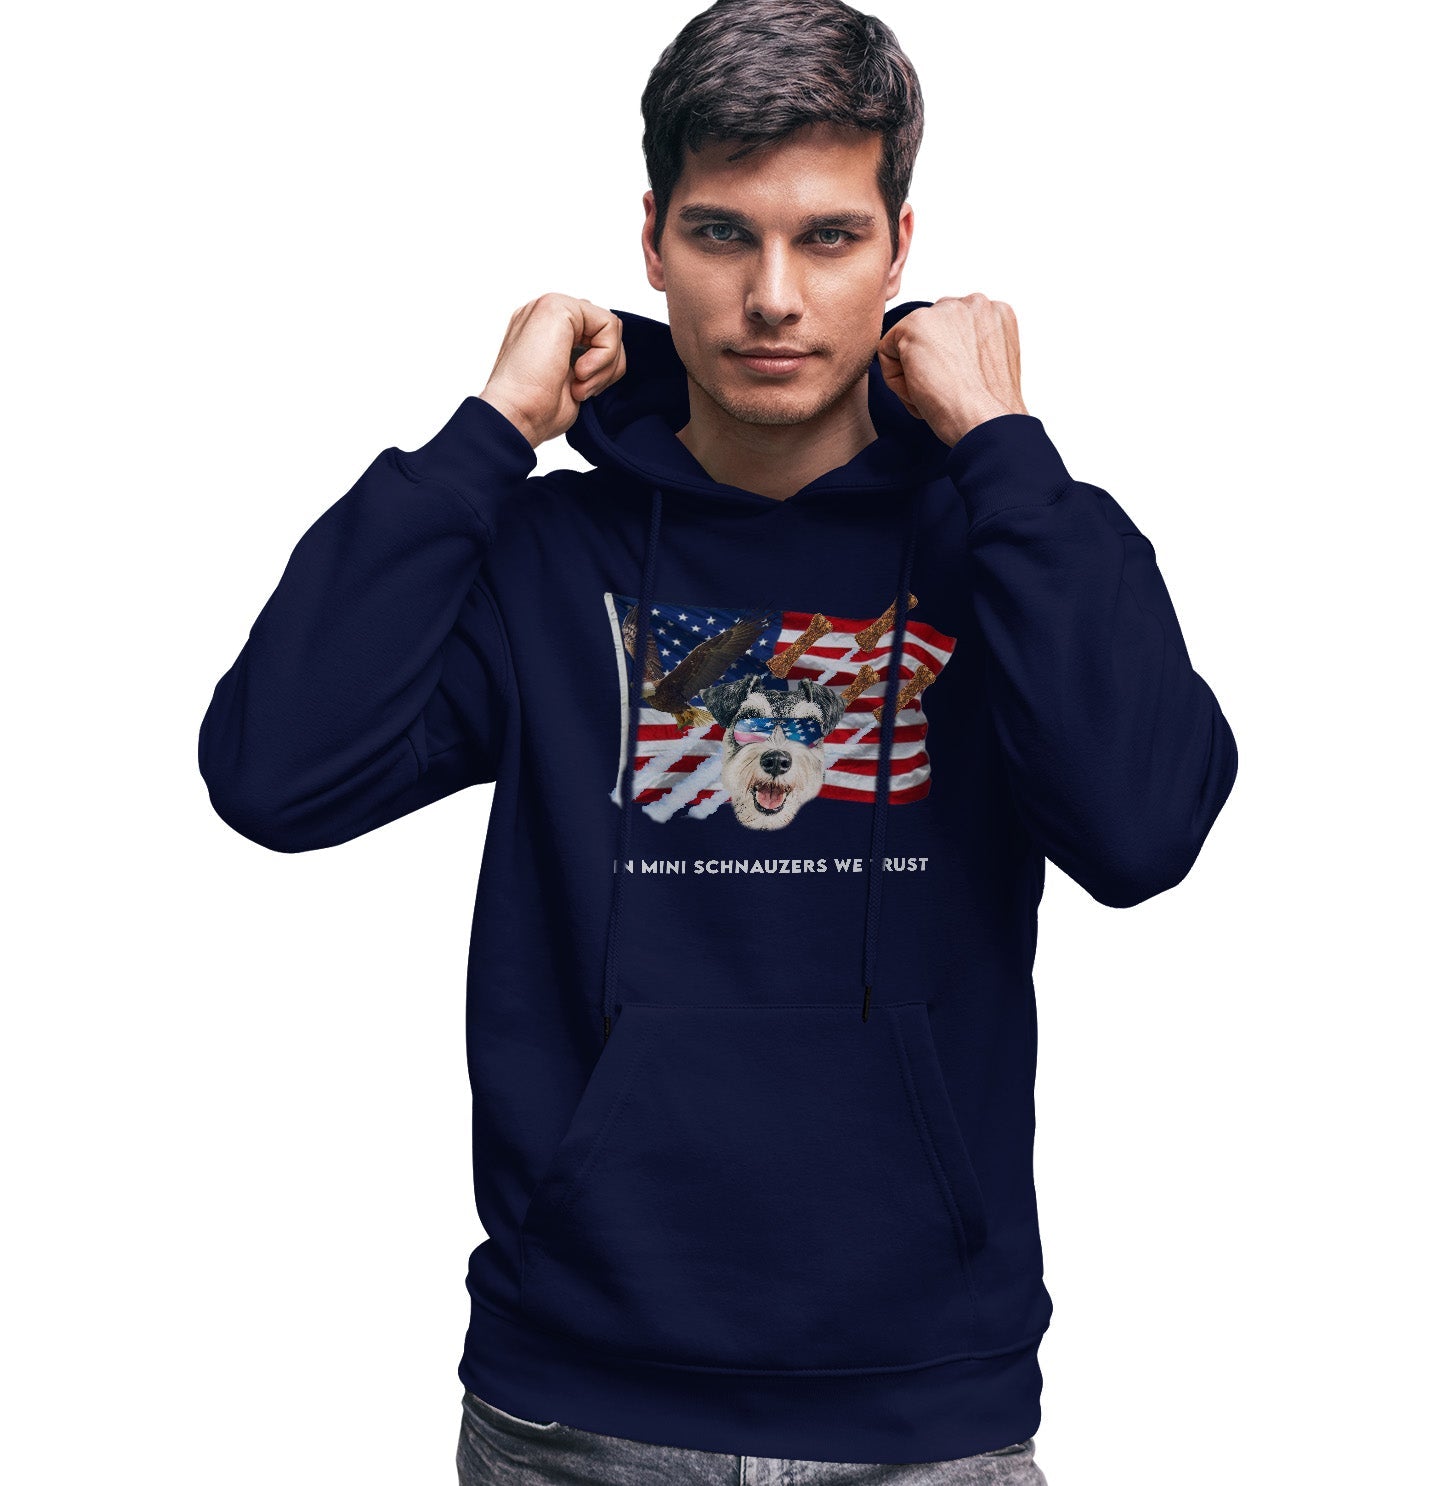 In Mini Schnauzers We Trust - Adult Unisex Hoodie Sweatshirt